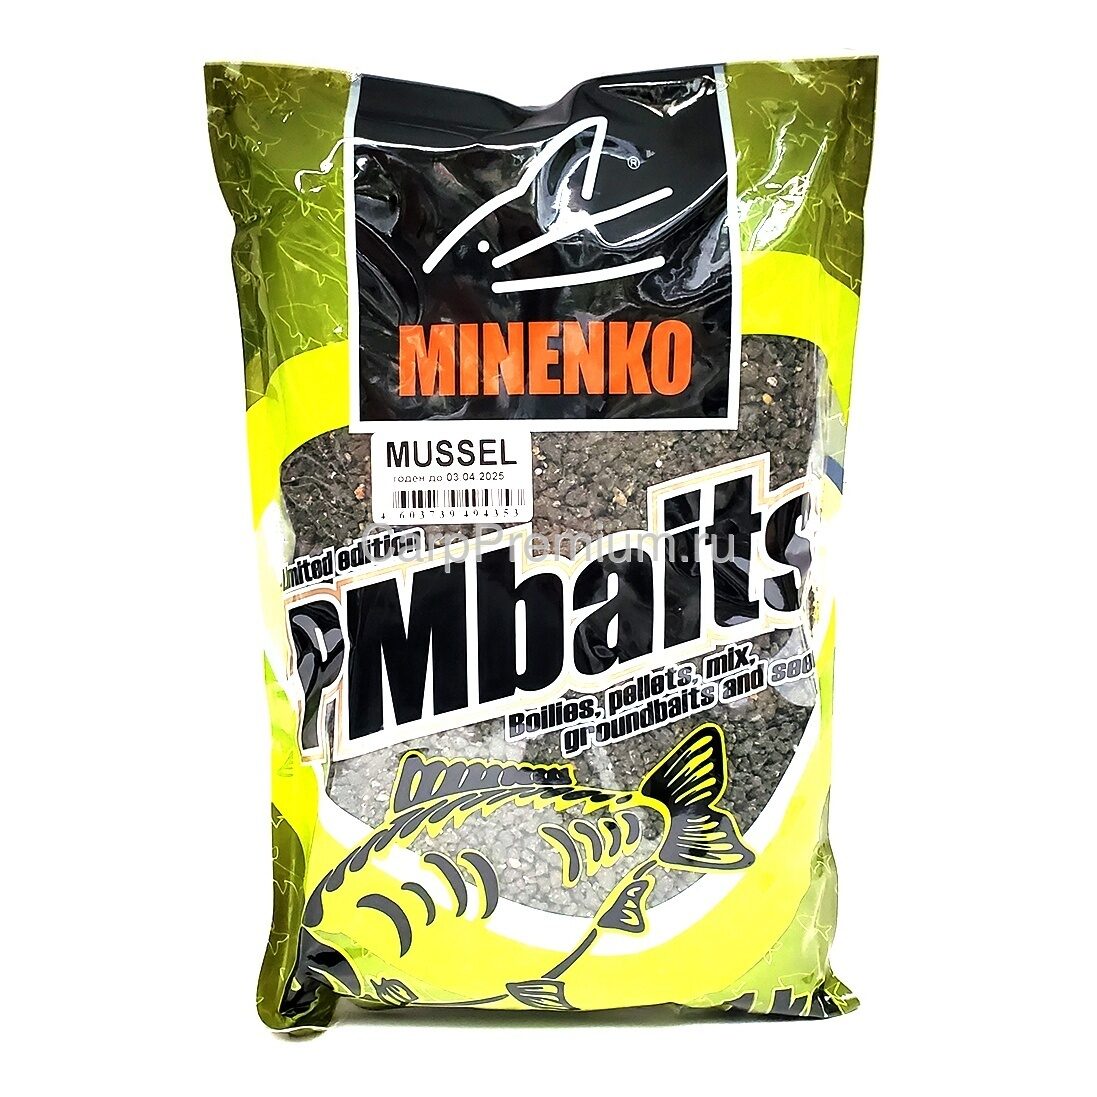 Прикормка Мидия Minenko (Миненко) - PMbaits Mussel Carp, 1 кг